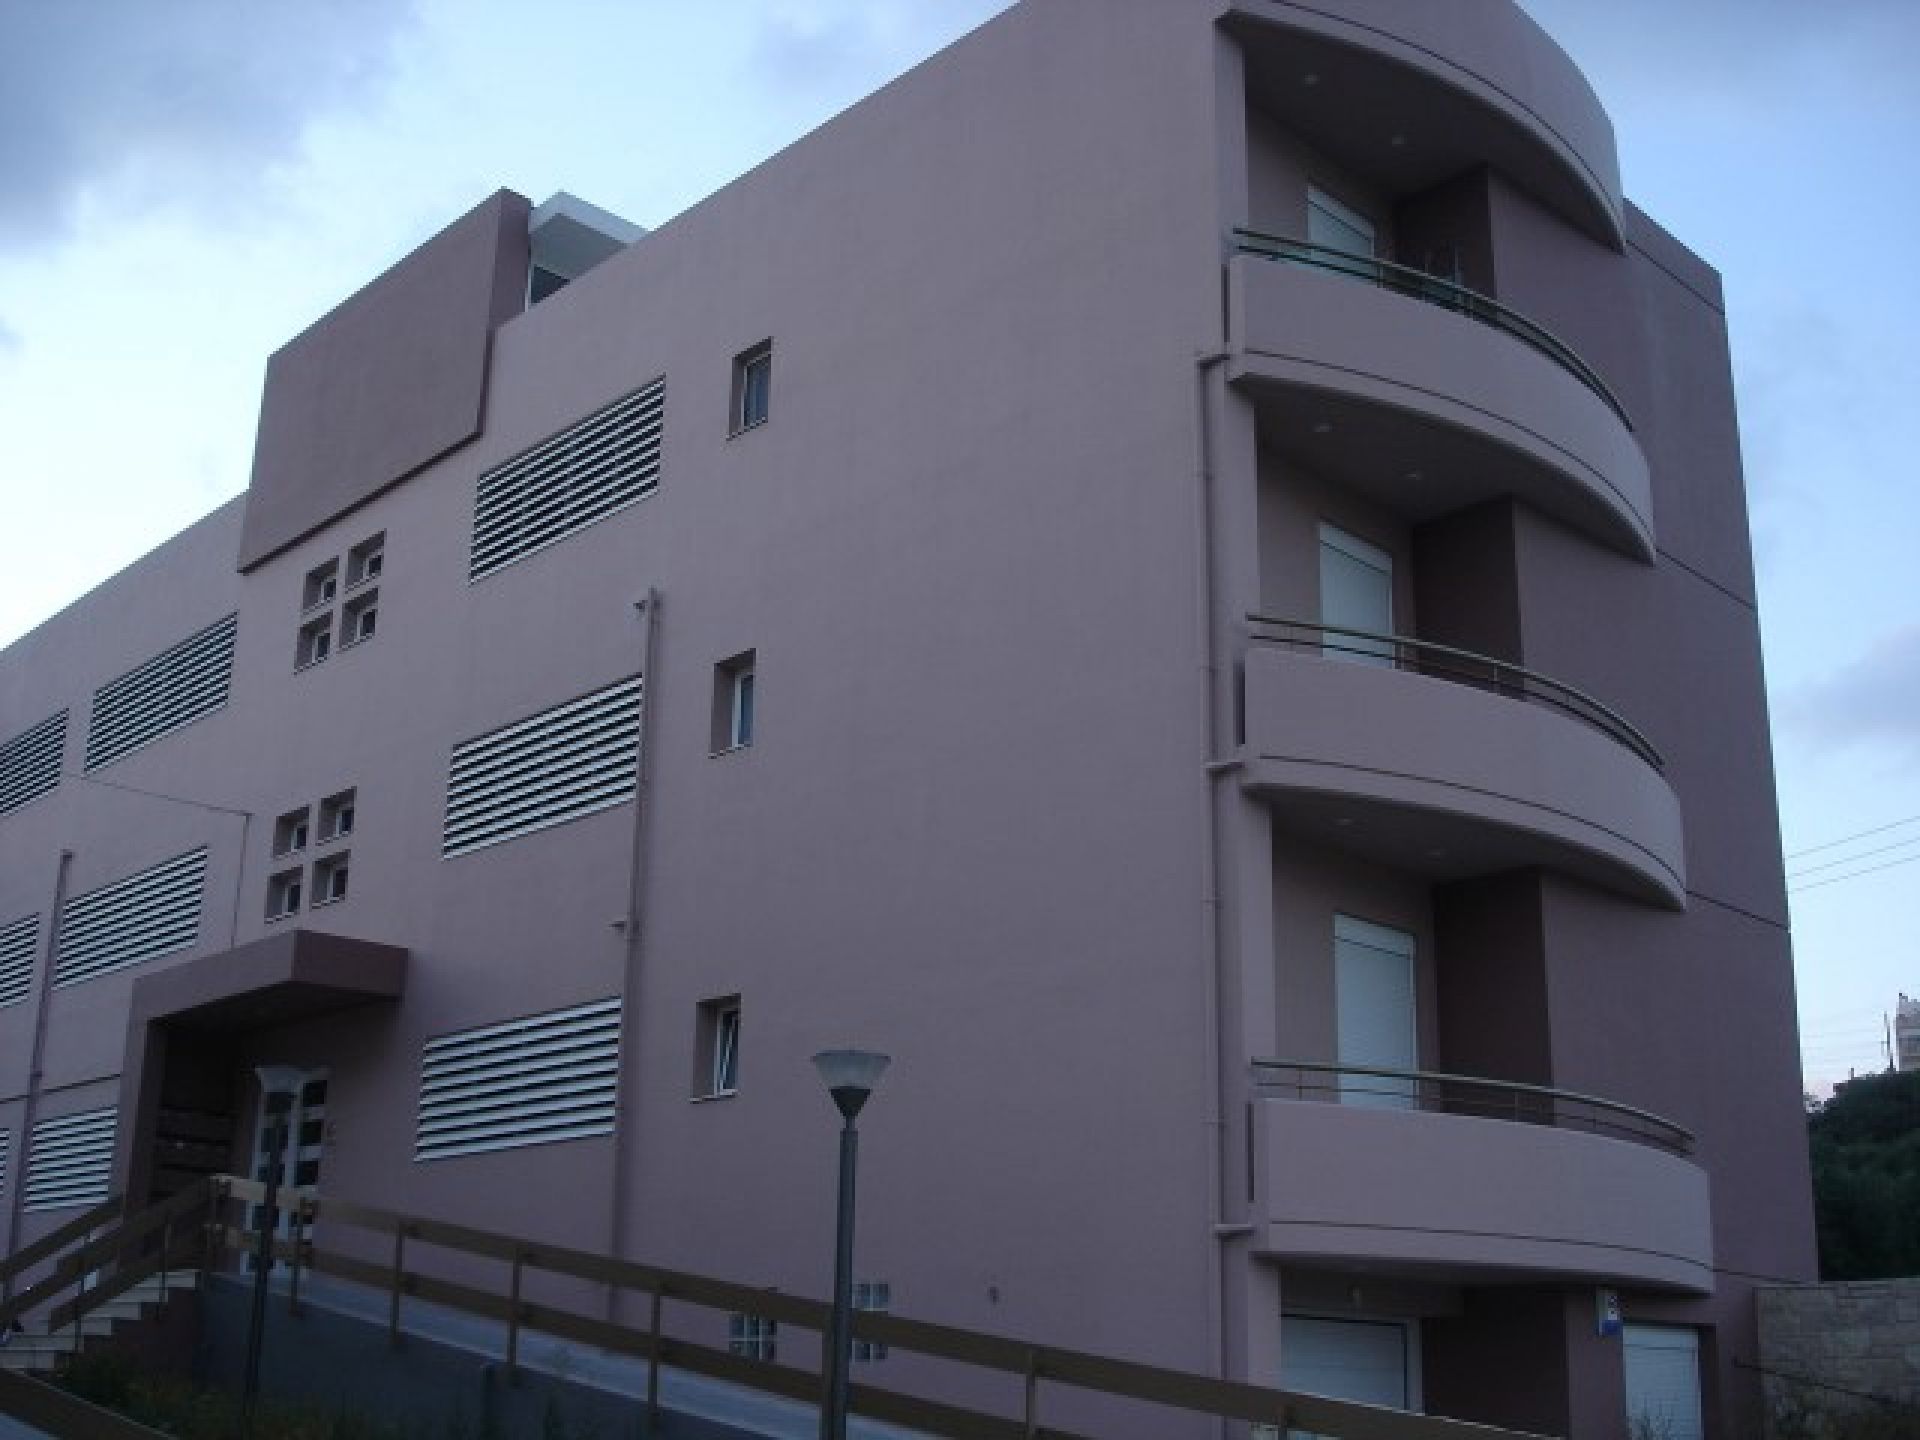 Three-storey residential complex